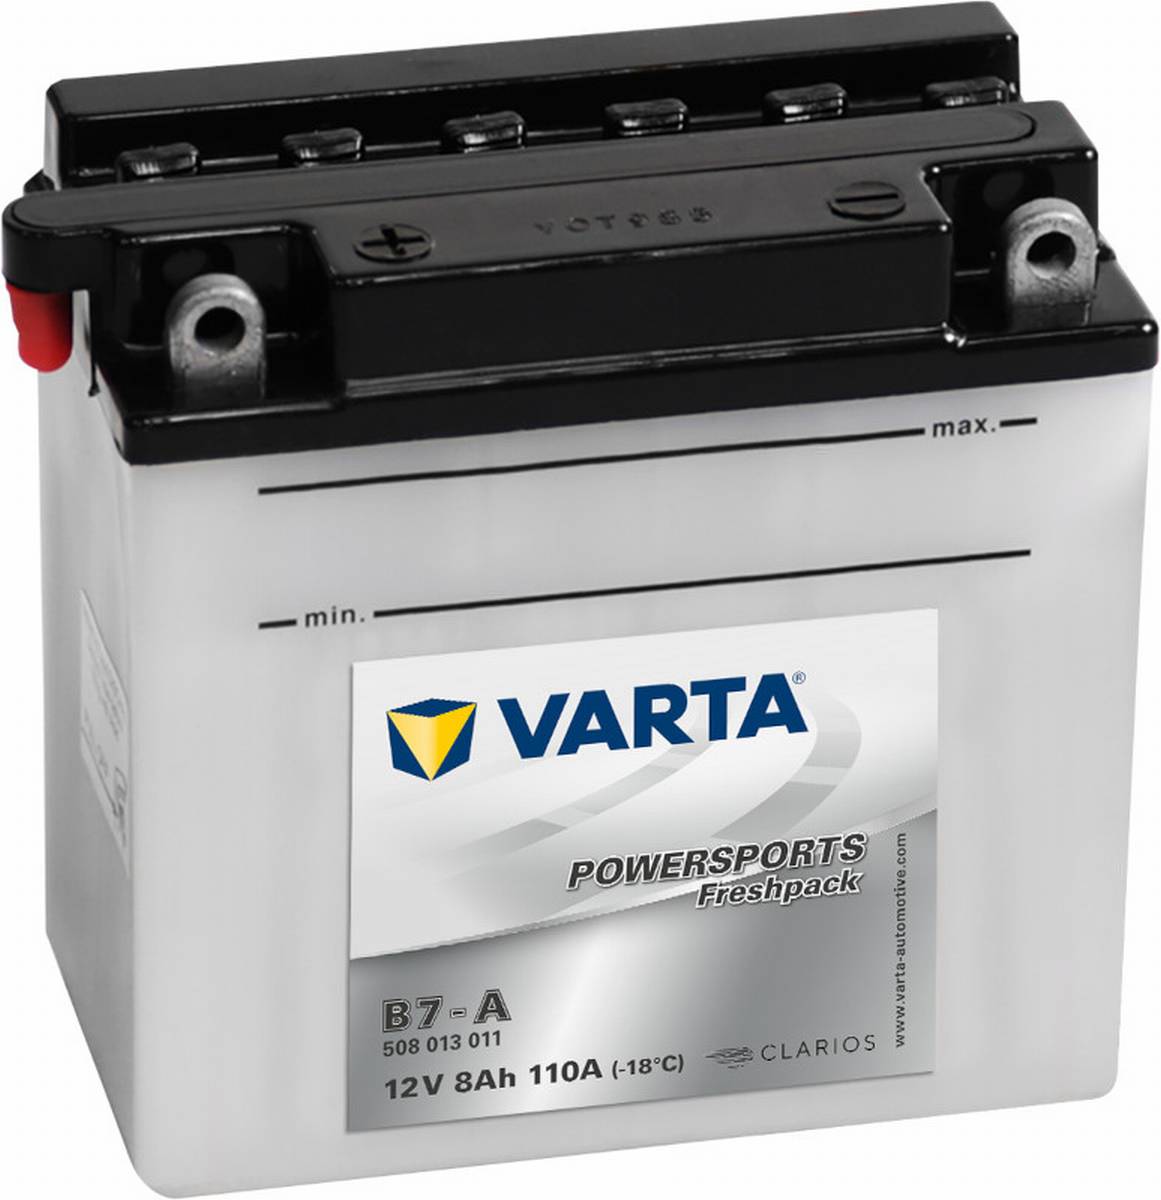 Varta Powersports Freshpack B7-A Motorrad Batterie 508013011 12V